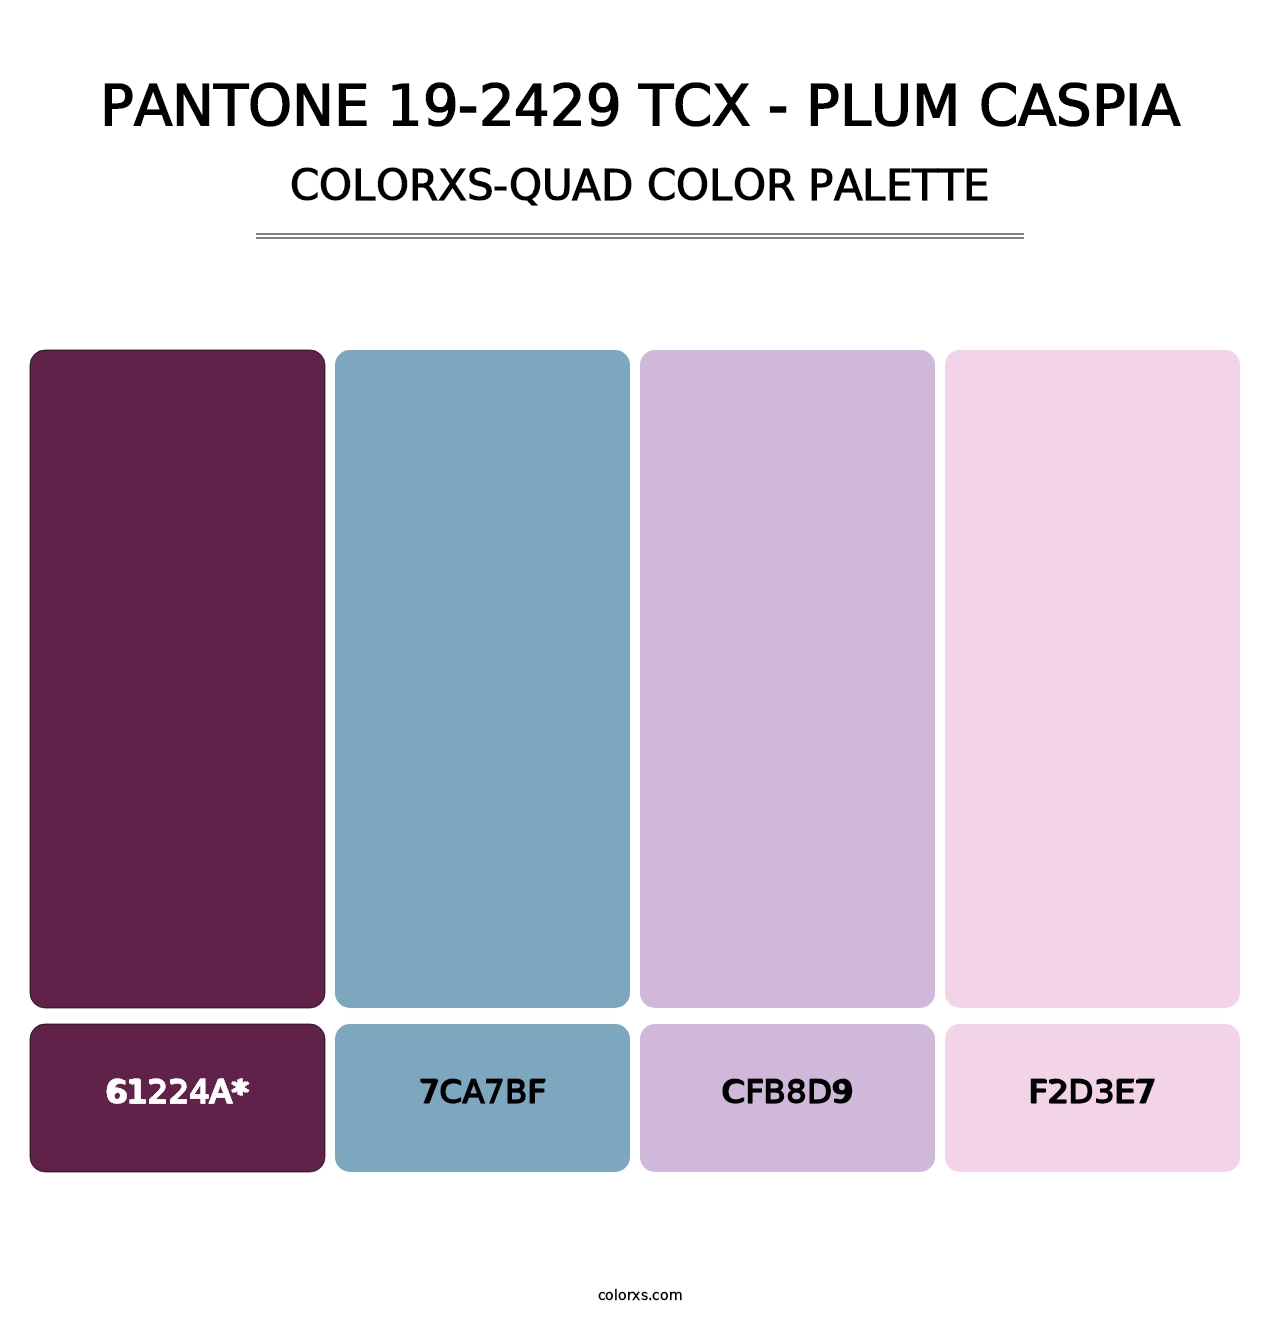 PANTONE 19-2429 TCX - Plum Caspia - Colorxs Quad Palette